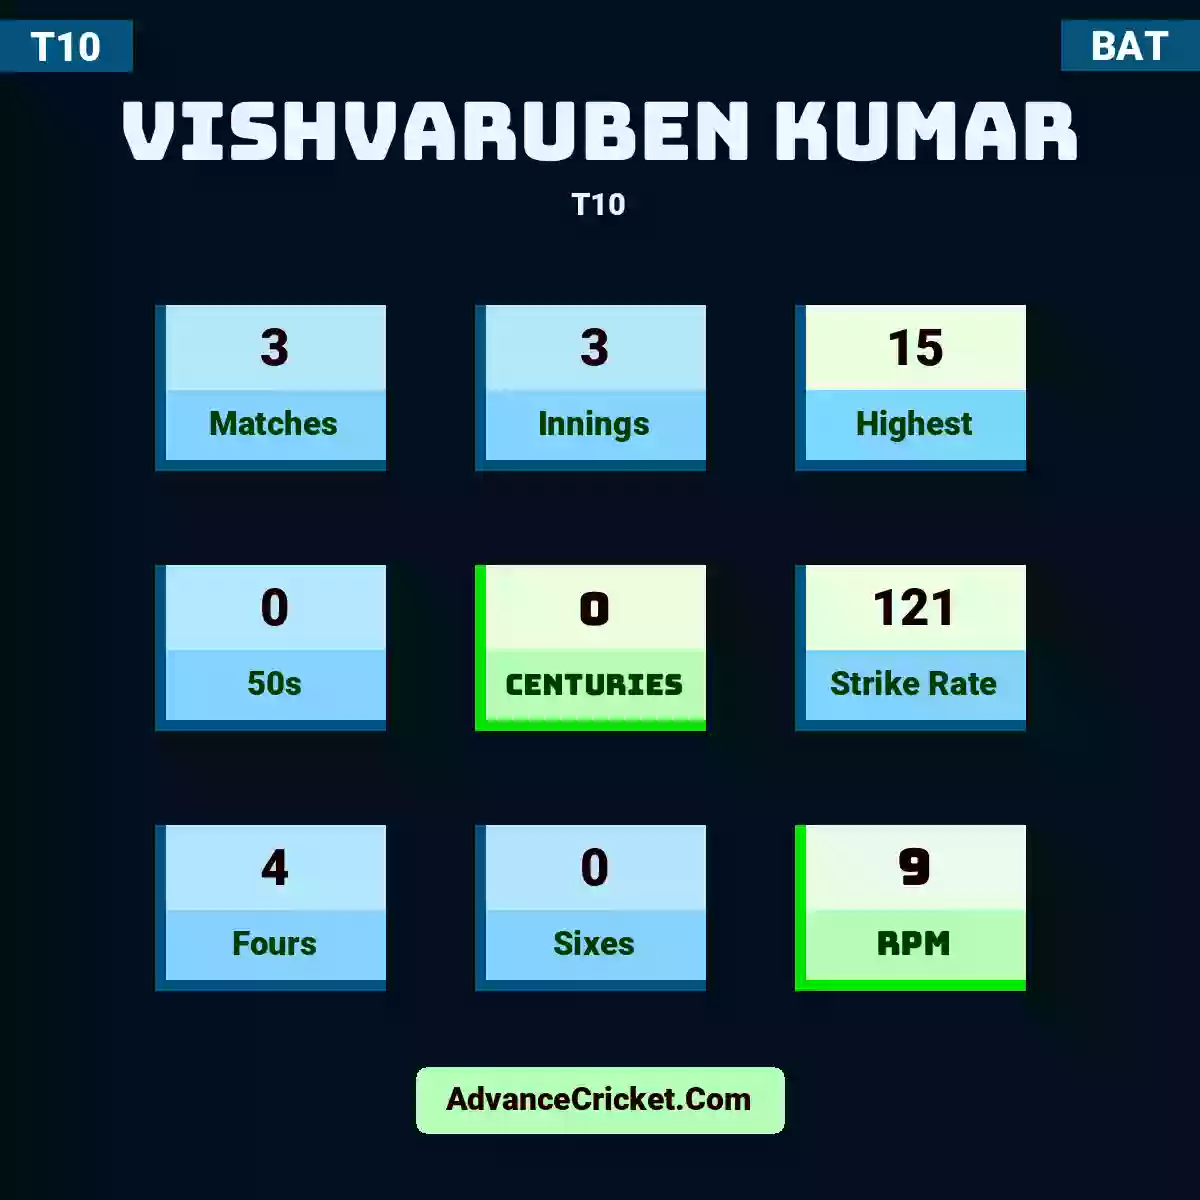 Vishvaruben Kumar T10 , Vishvaruben Kumar played 3 matches, scored 15 runs as highest, 0 half-centuries, and 0 centuries, with a strike rate of 121. V.Kumar hit 4 fours and 0 sixes, with an RPM of 9.